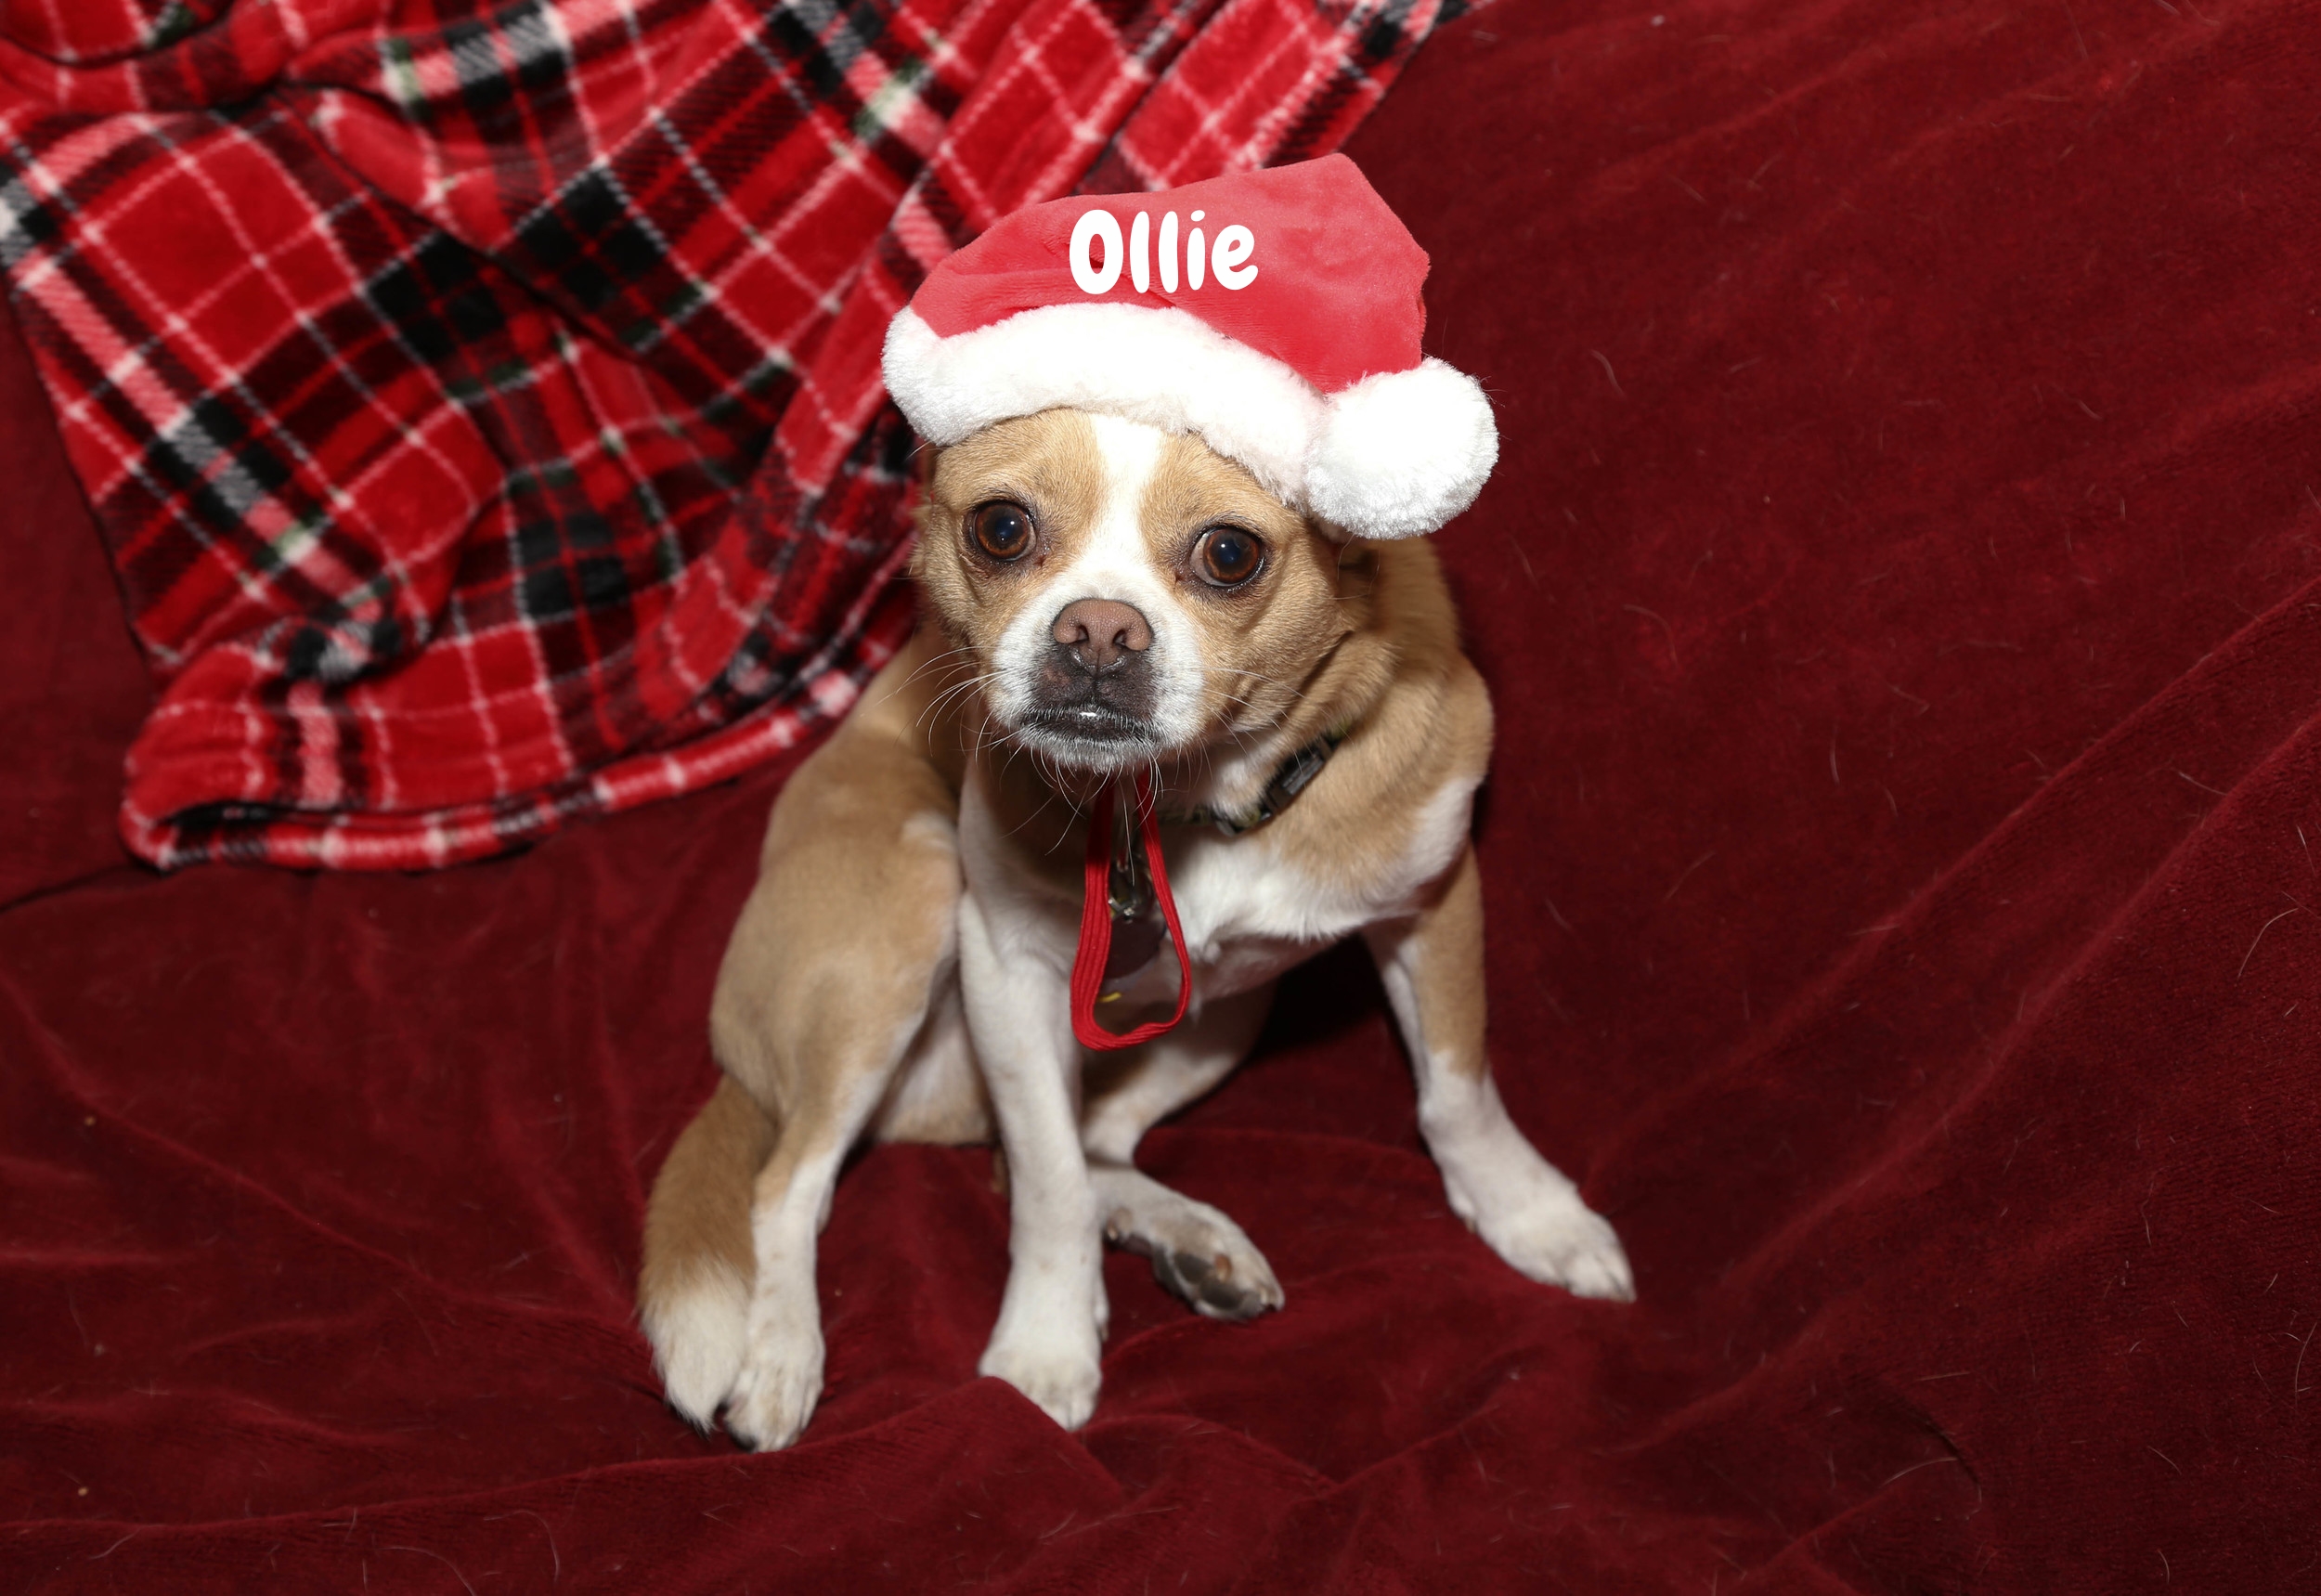 ollie the doggie.jpg